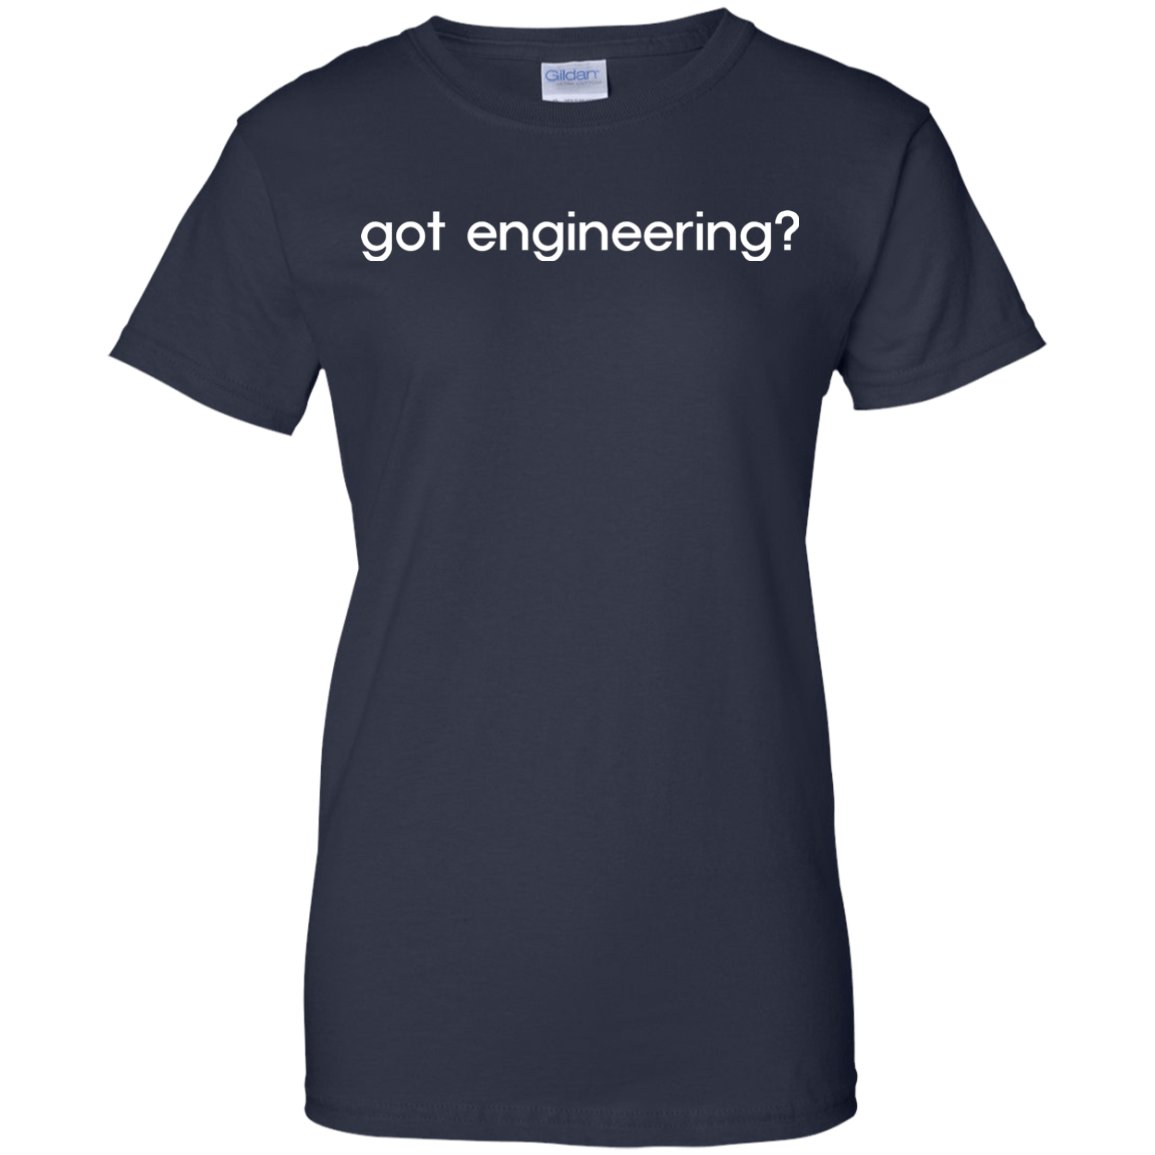 Got Engineering?